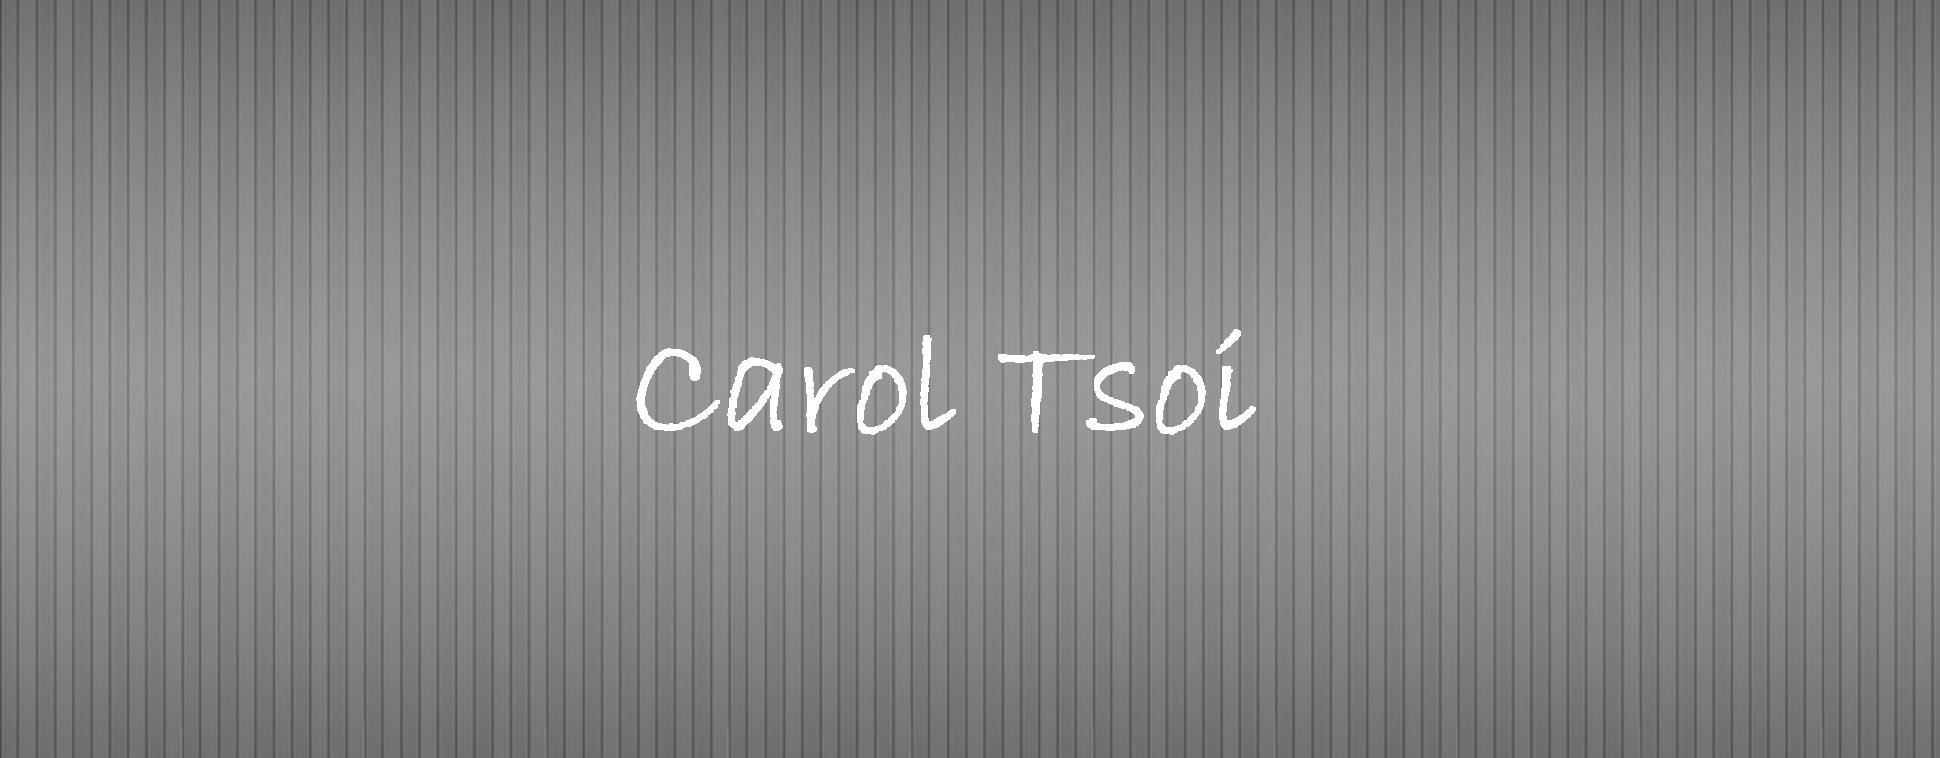 Carol Tsoi.jpg